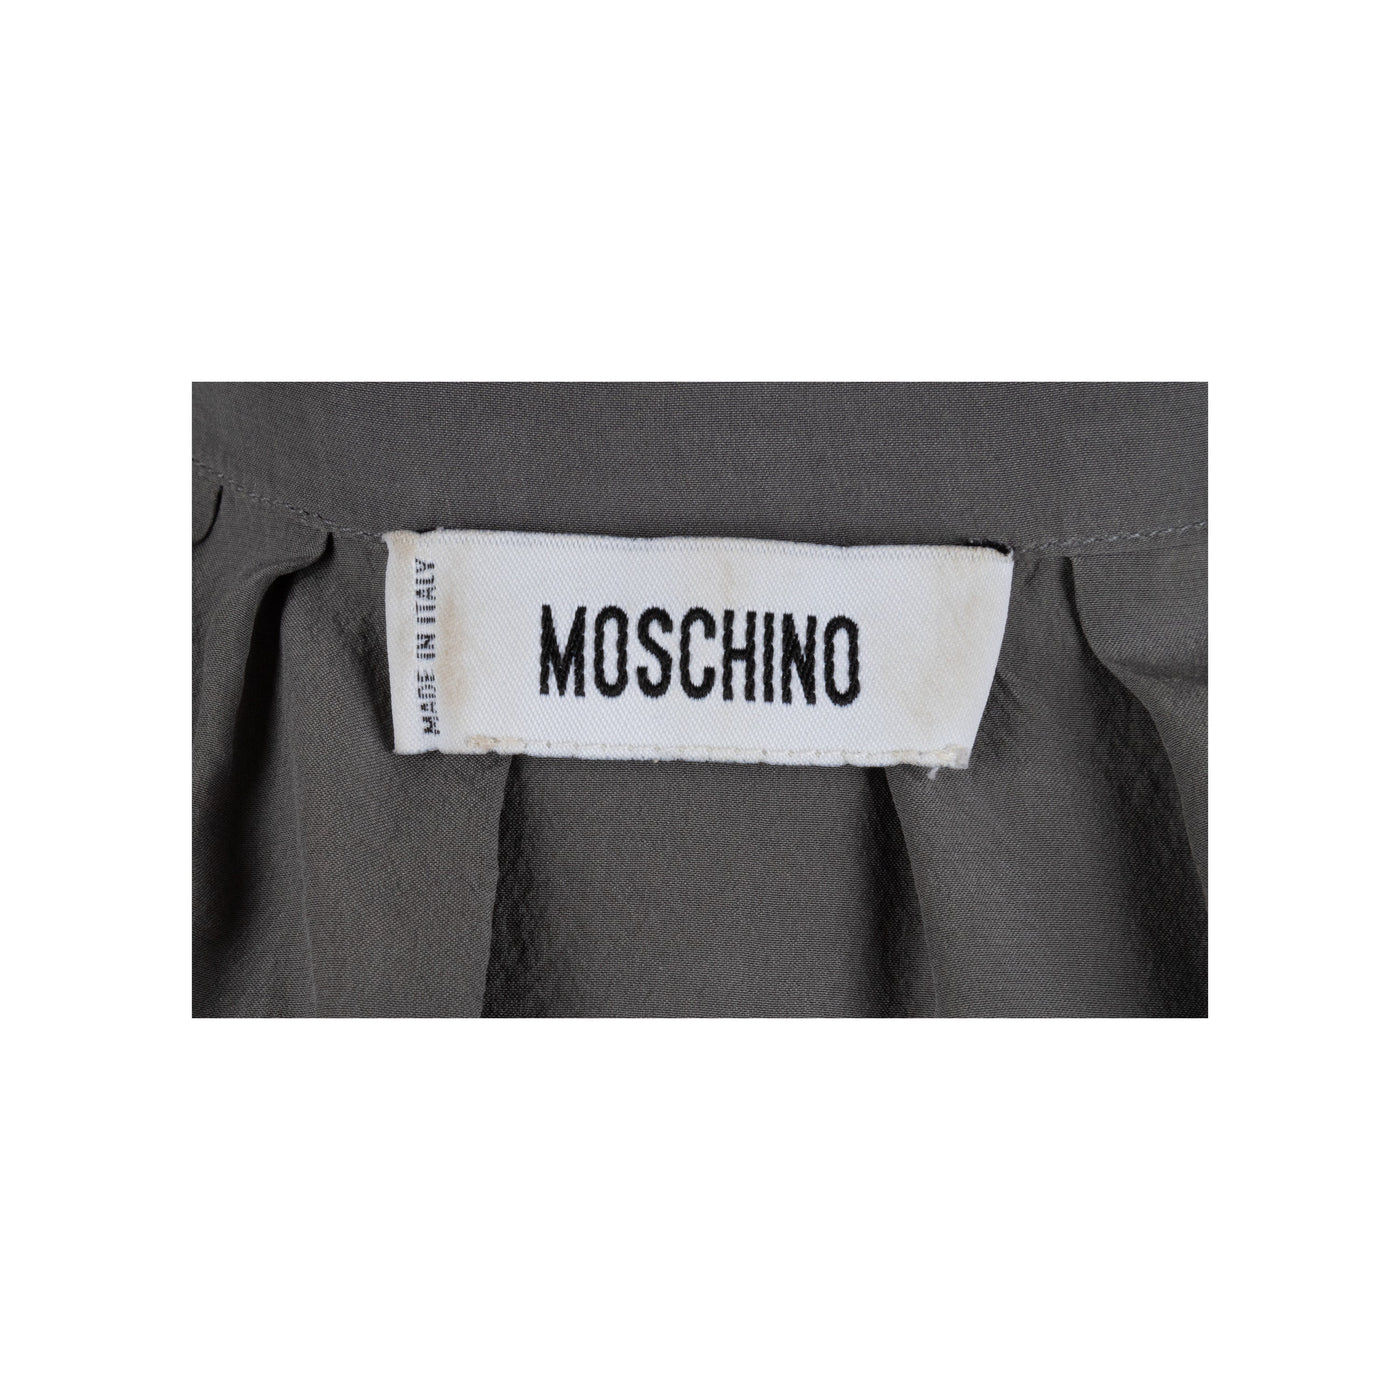 Secondhand Moschino Silk Top 